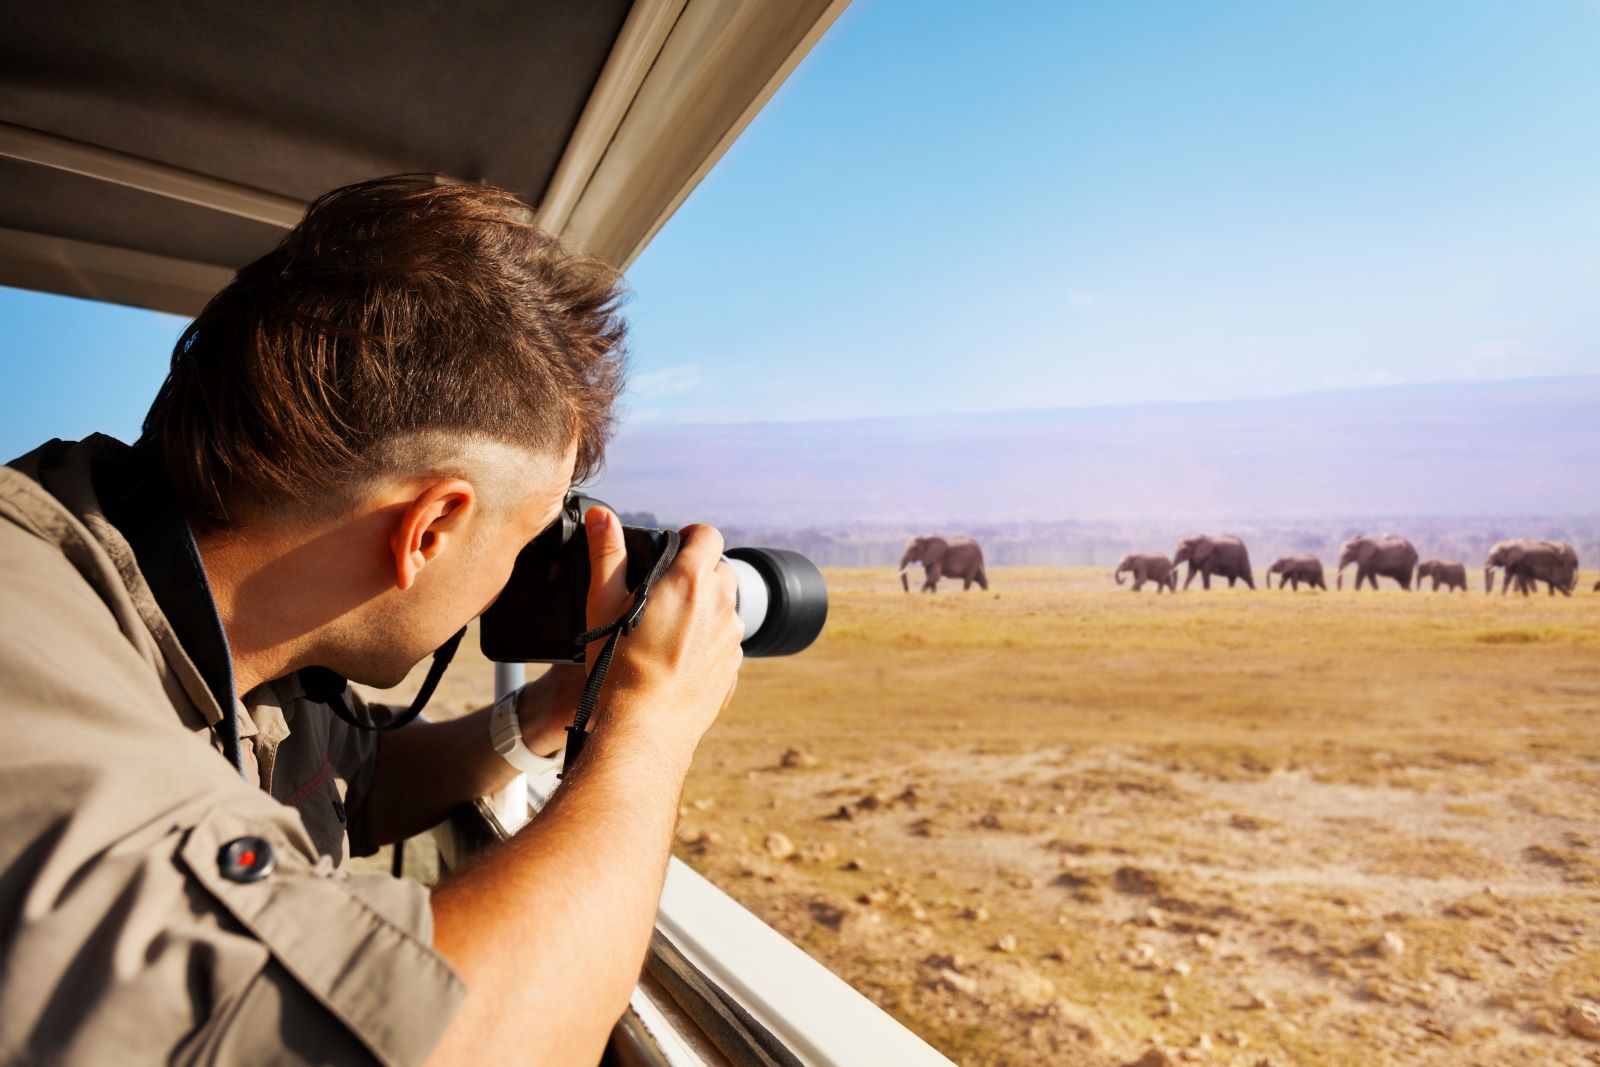 A man photographing elephants while on safari in Botswana